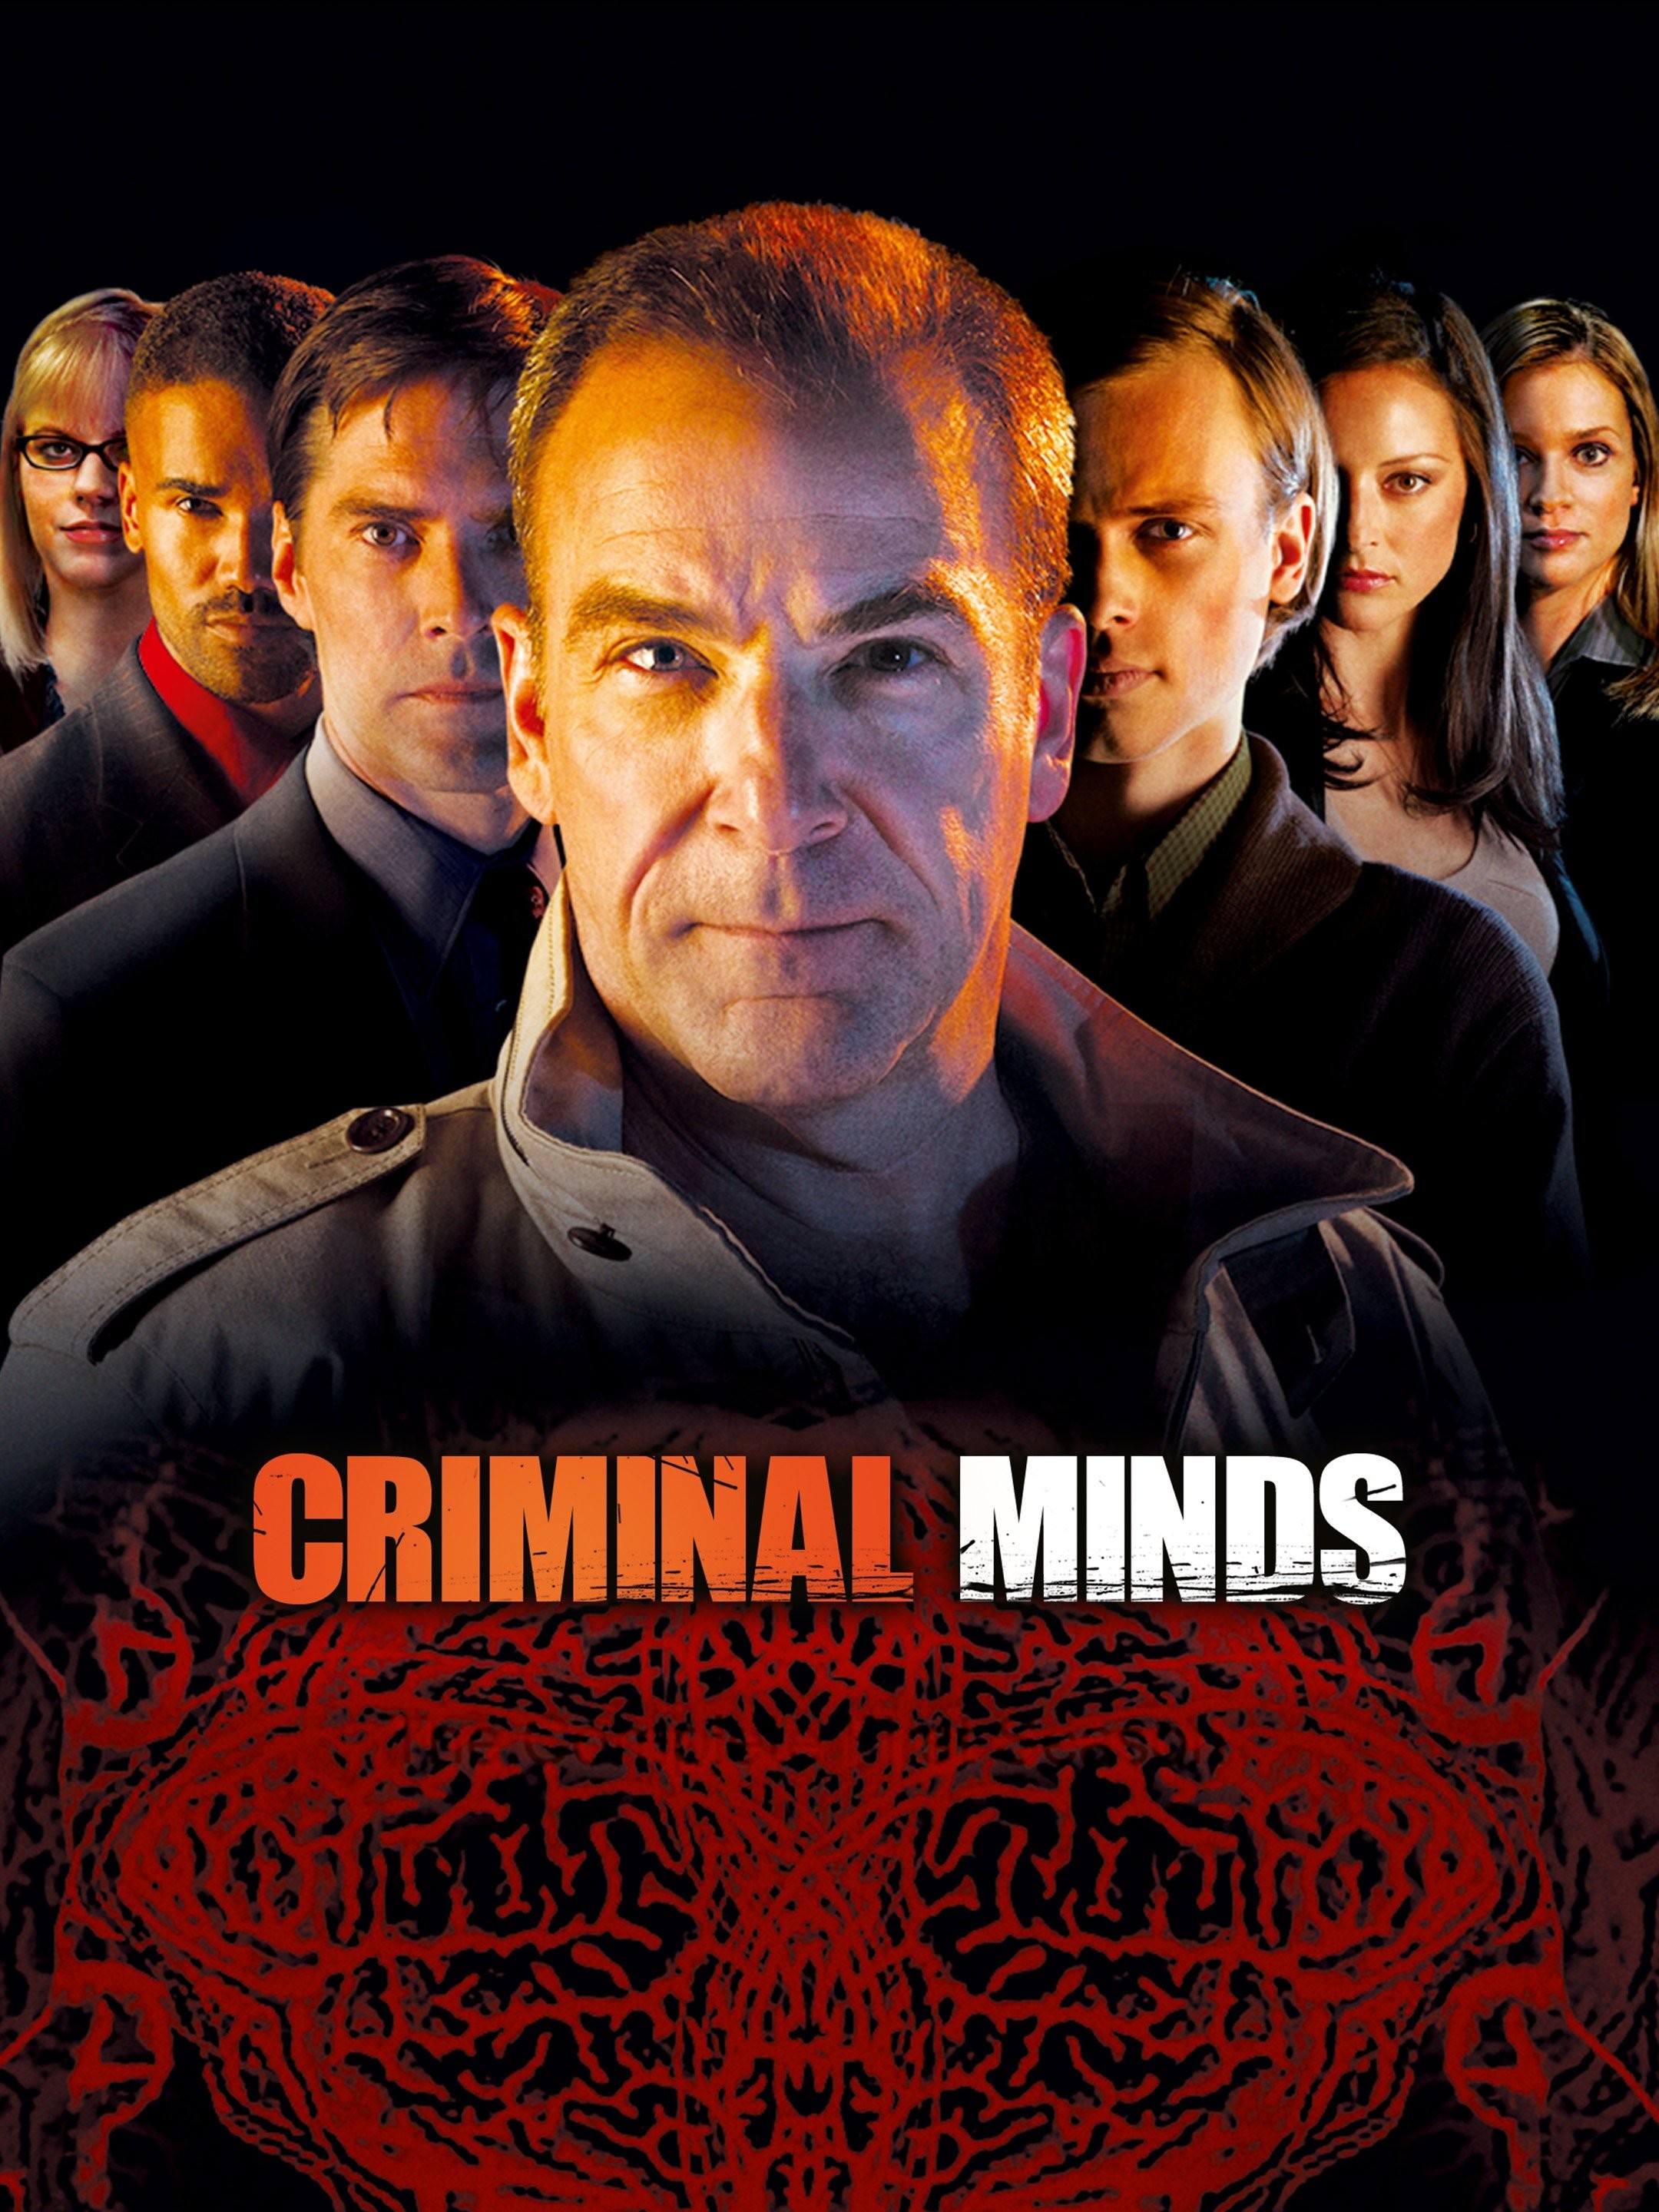 Prime Video: Criminal Minds - Season 7